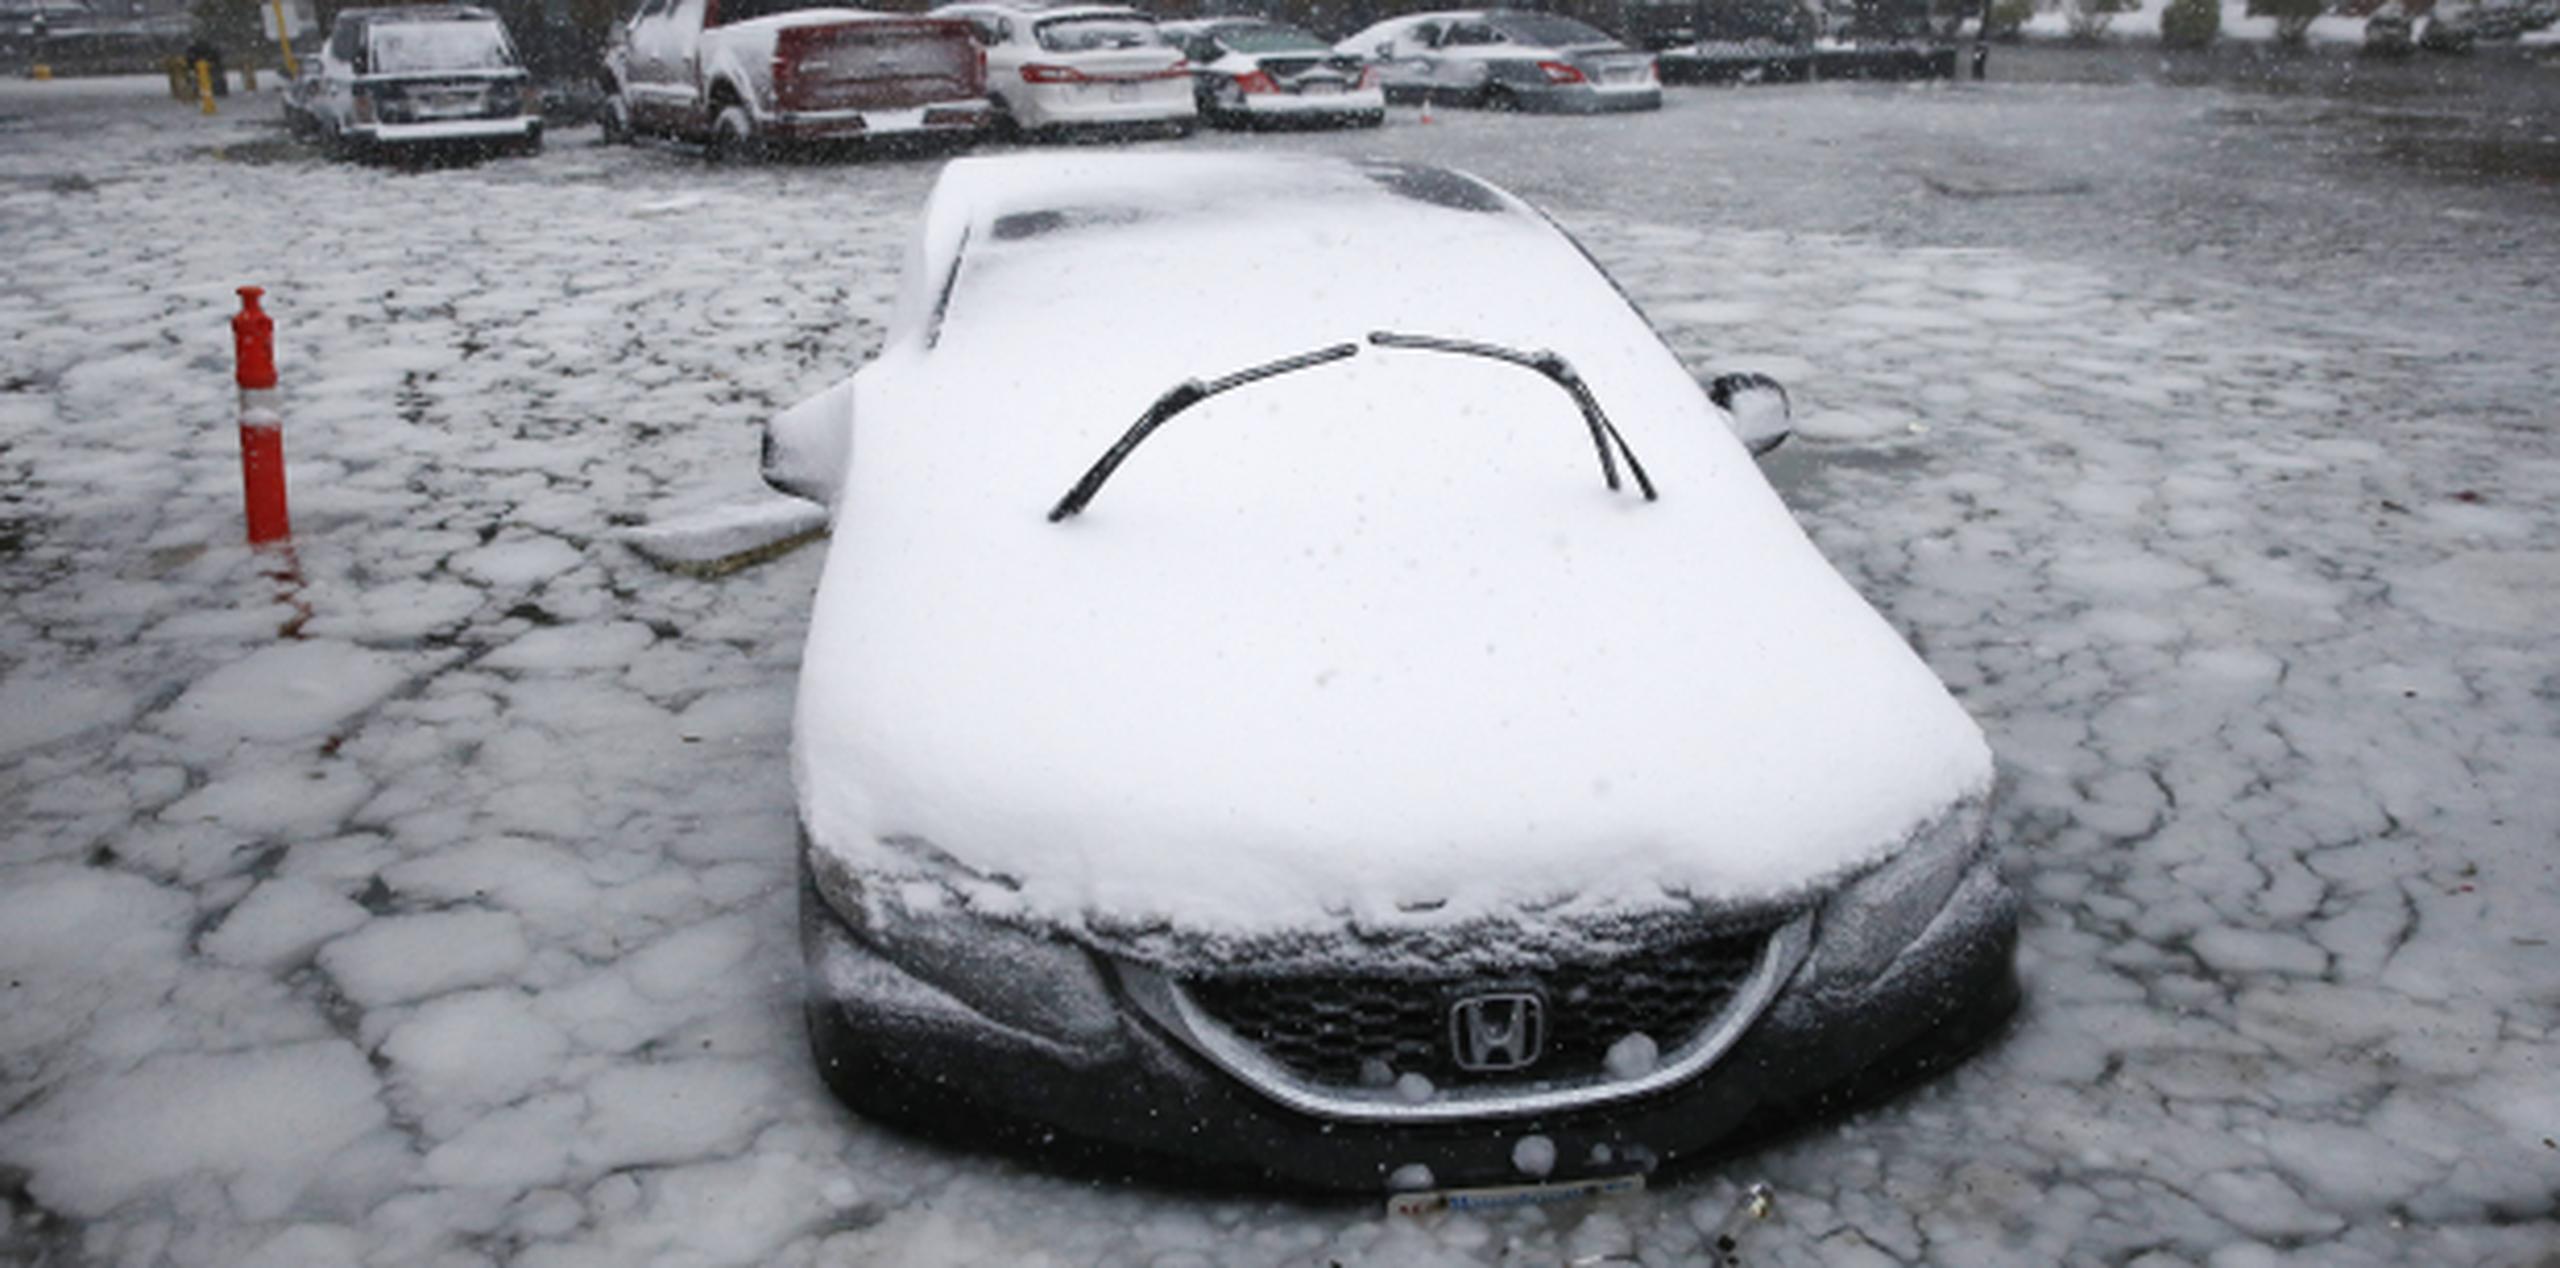 Un auto rodeado de agua y nieve en Boston. (AP / Michael Dwyer)